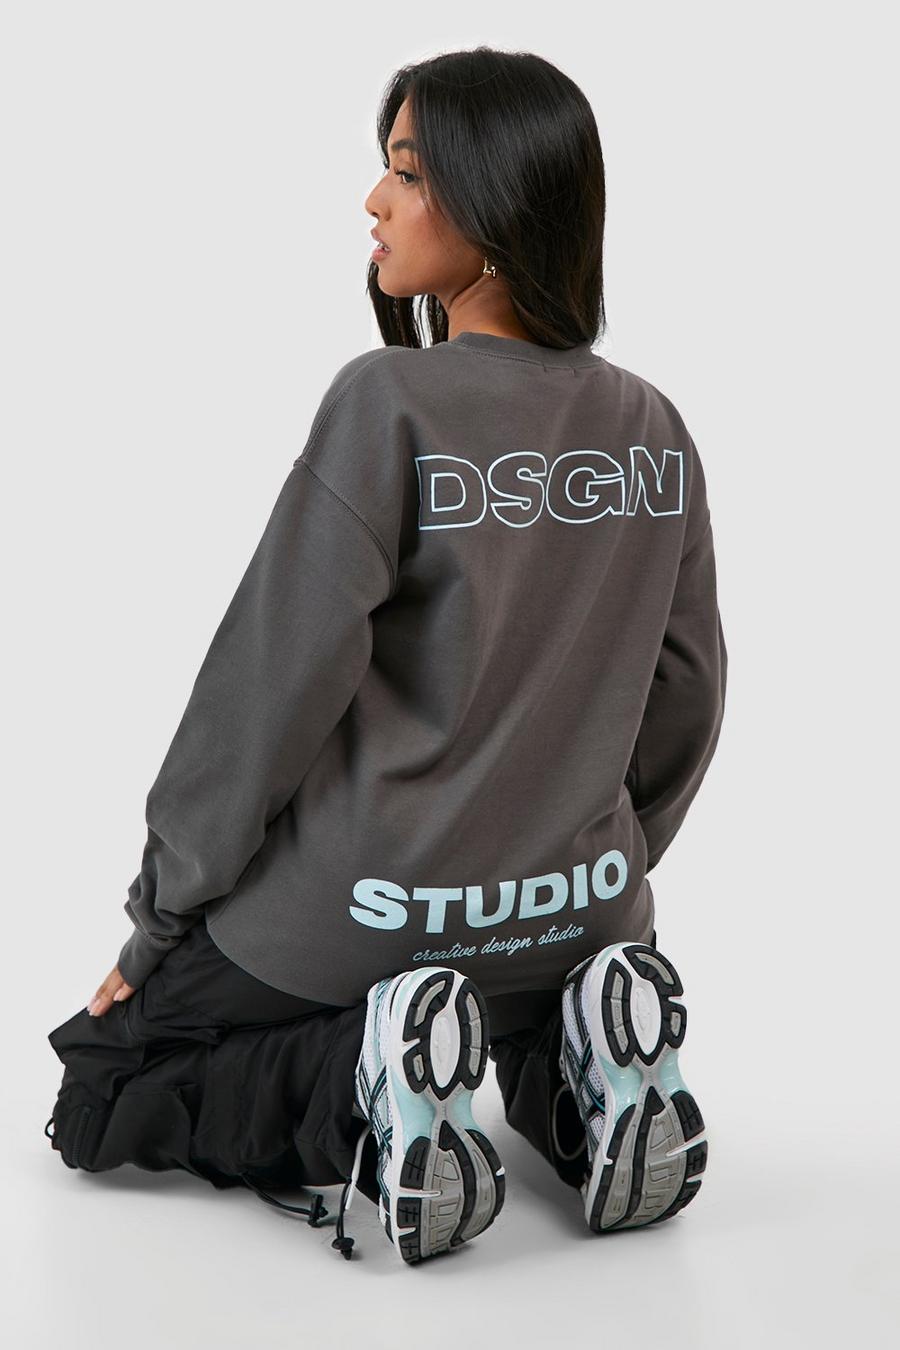 Charcoal Petite Dsgn Studio Back Print  Sweatshirt 